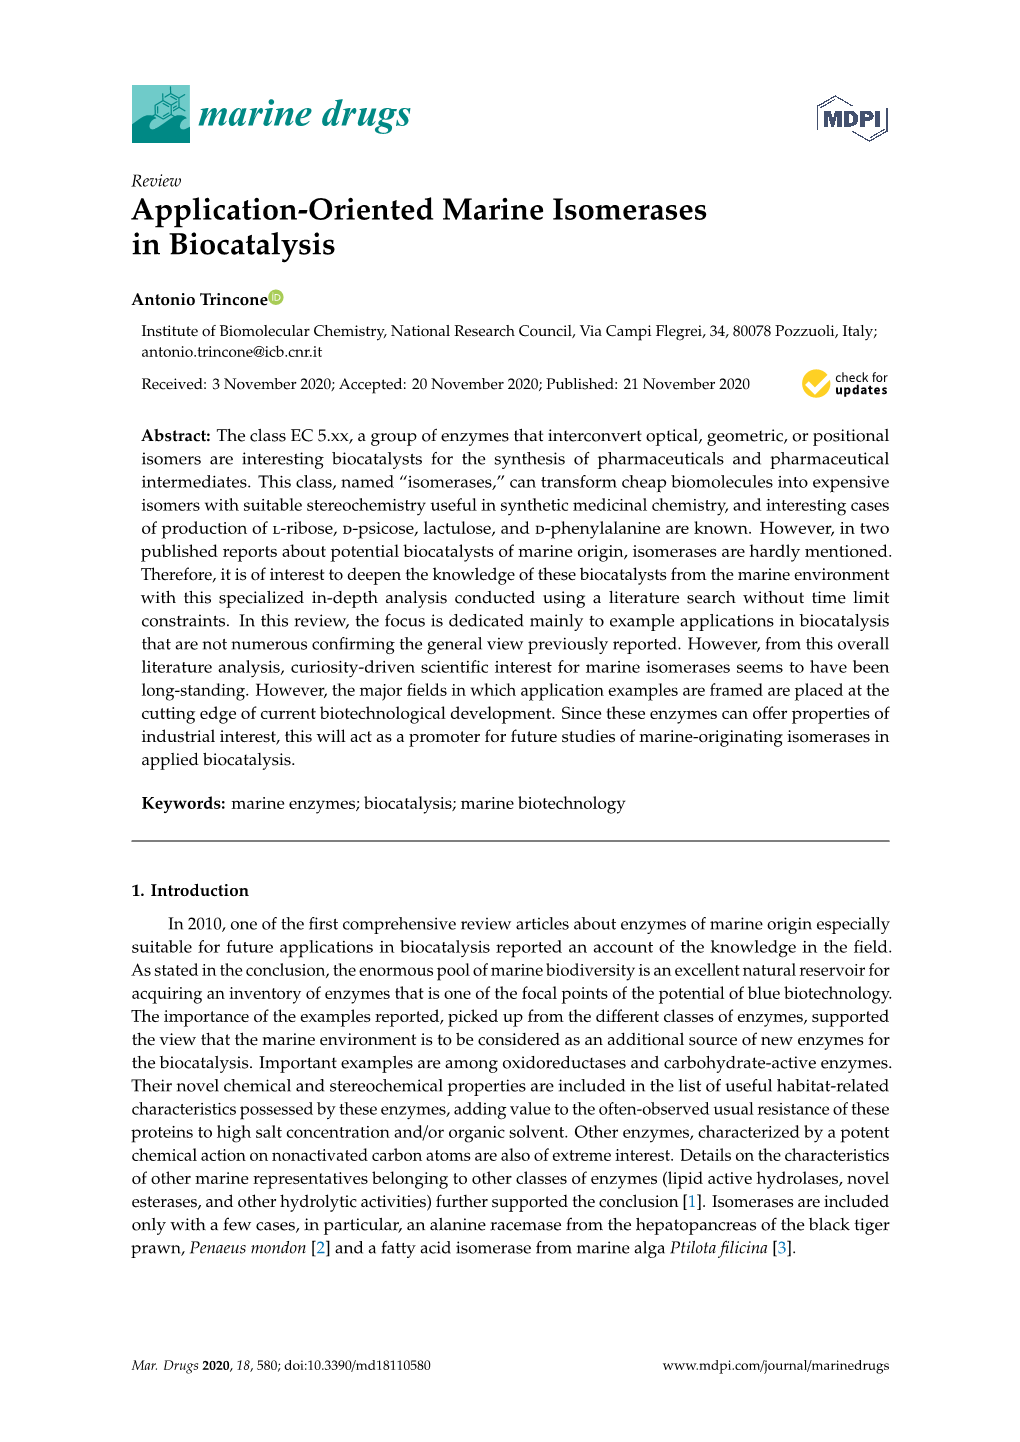 Application-Oriented Marine Isomerases in Biocatalysis